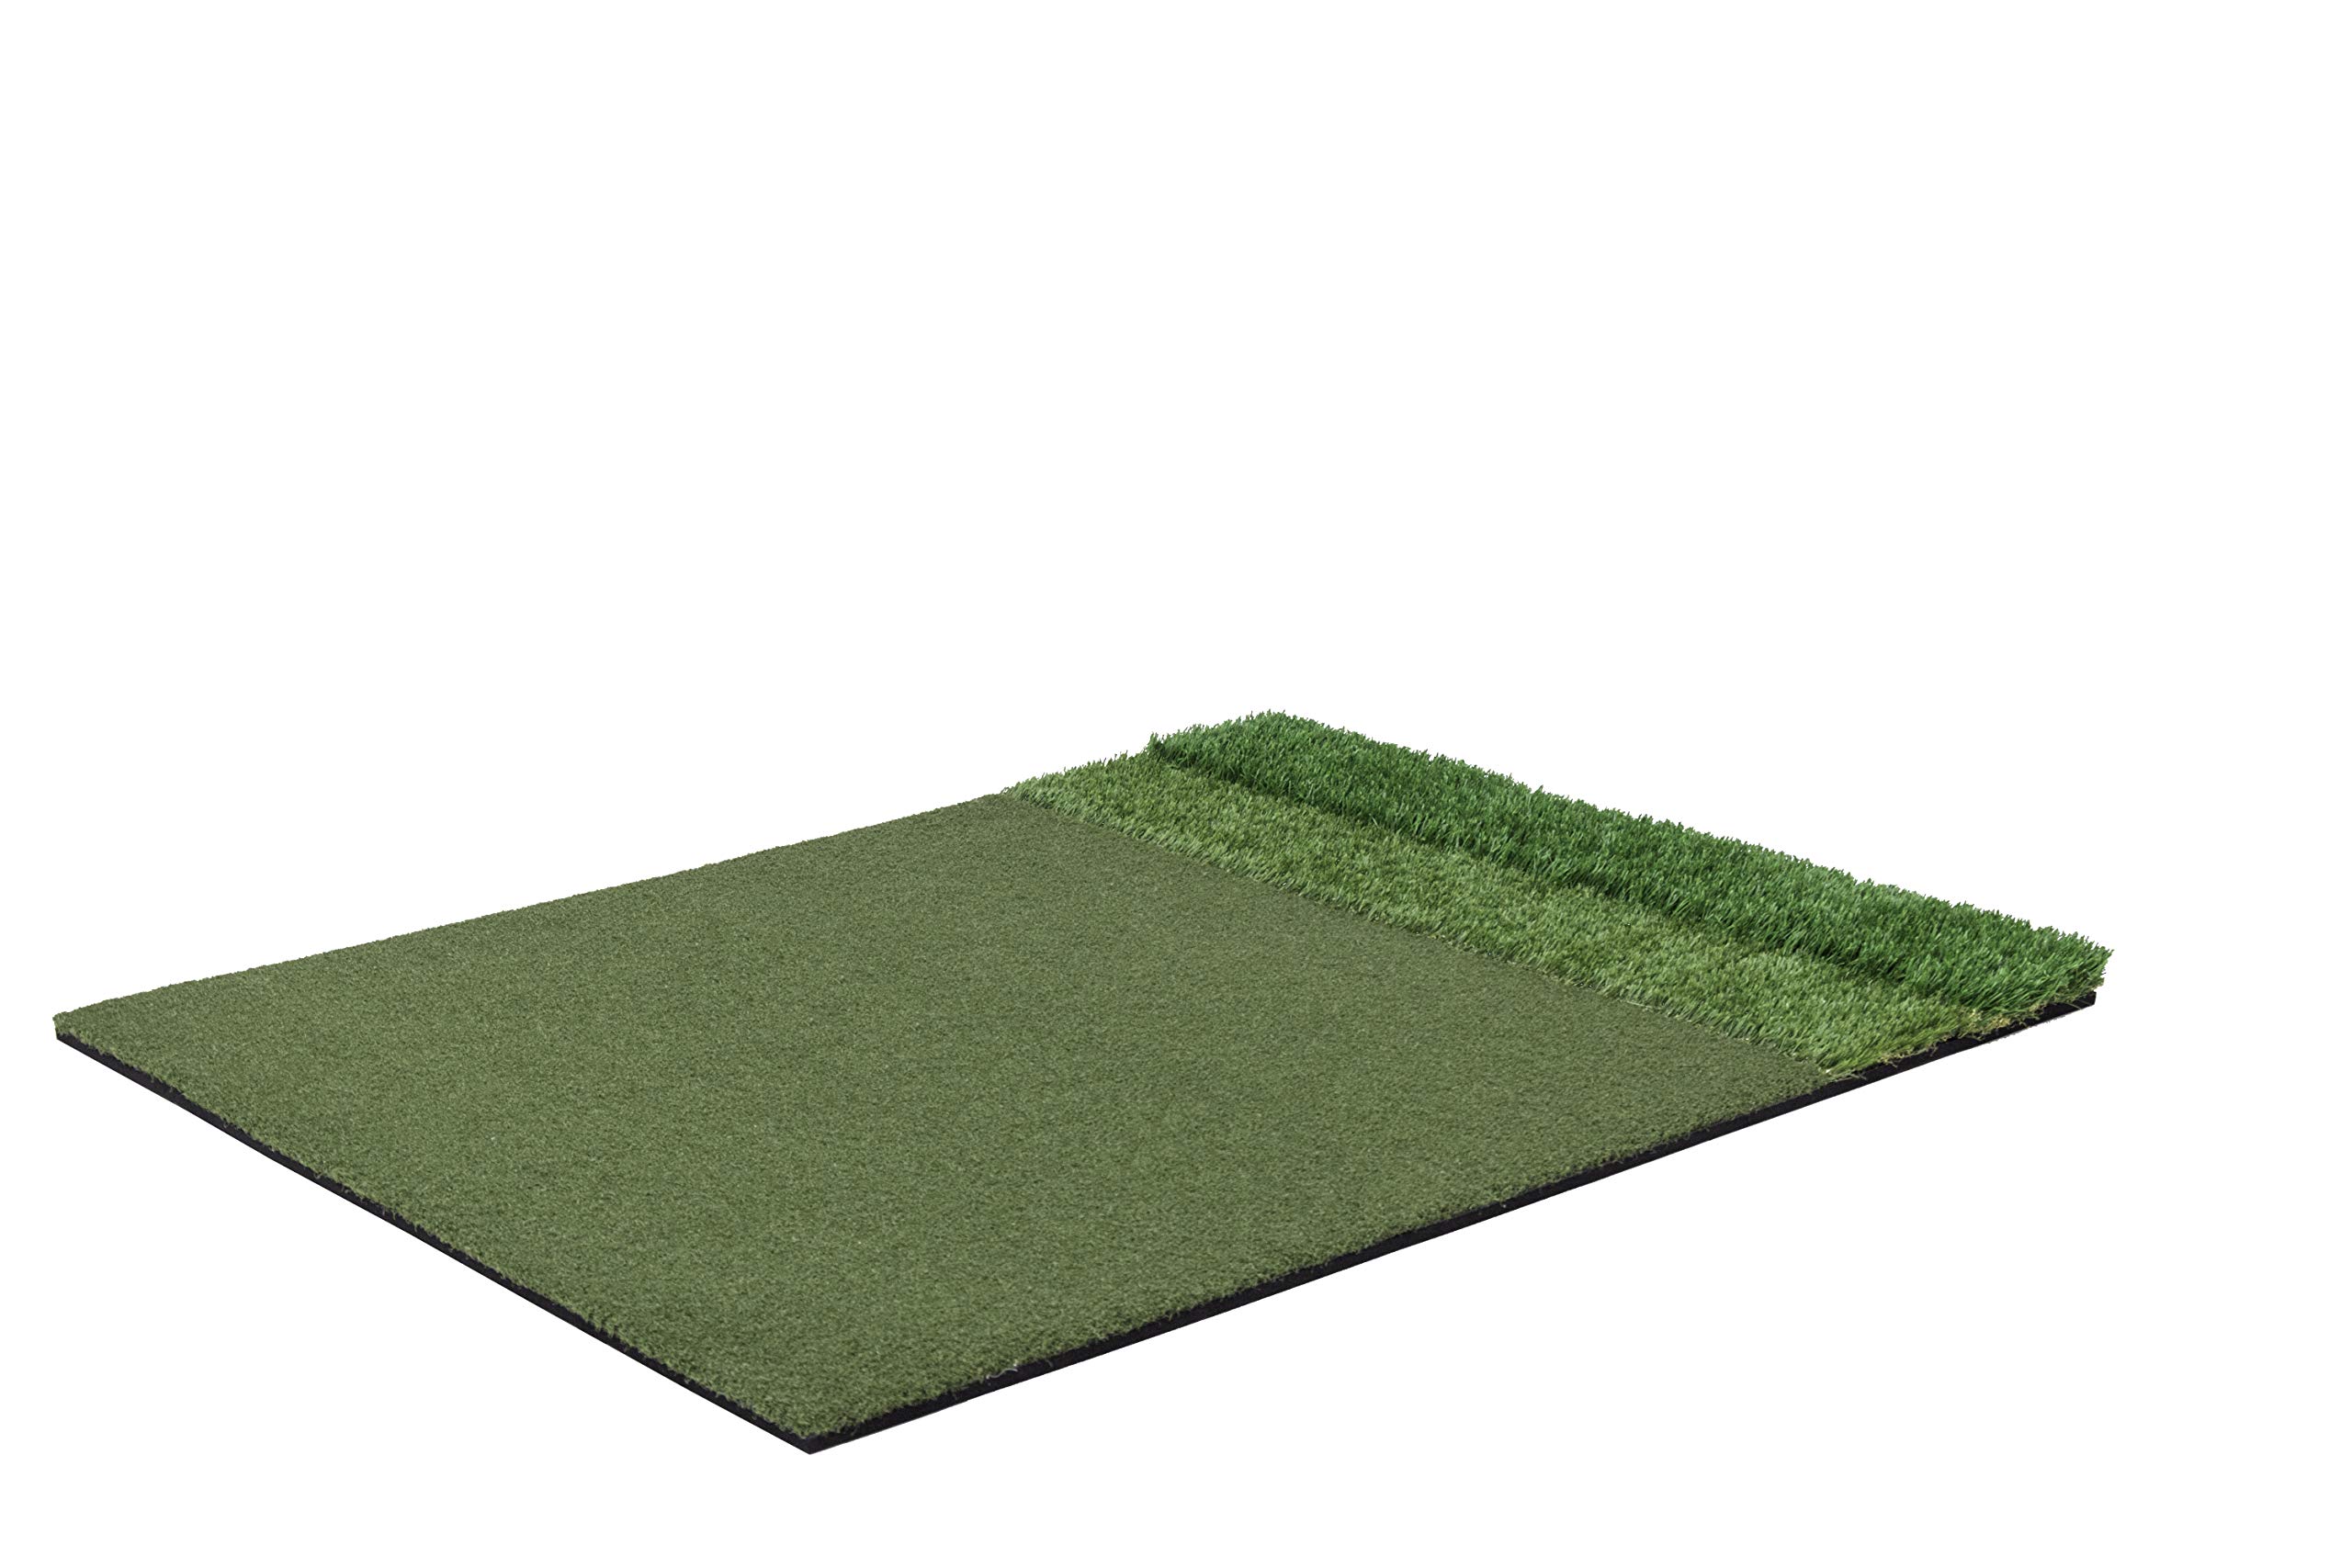 Motivo Golf StrokeSaver Tri-Turf Tour golf Mat (4 x 5 Feet)